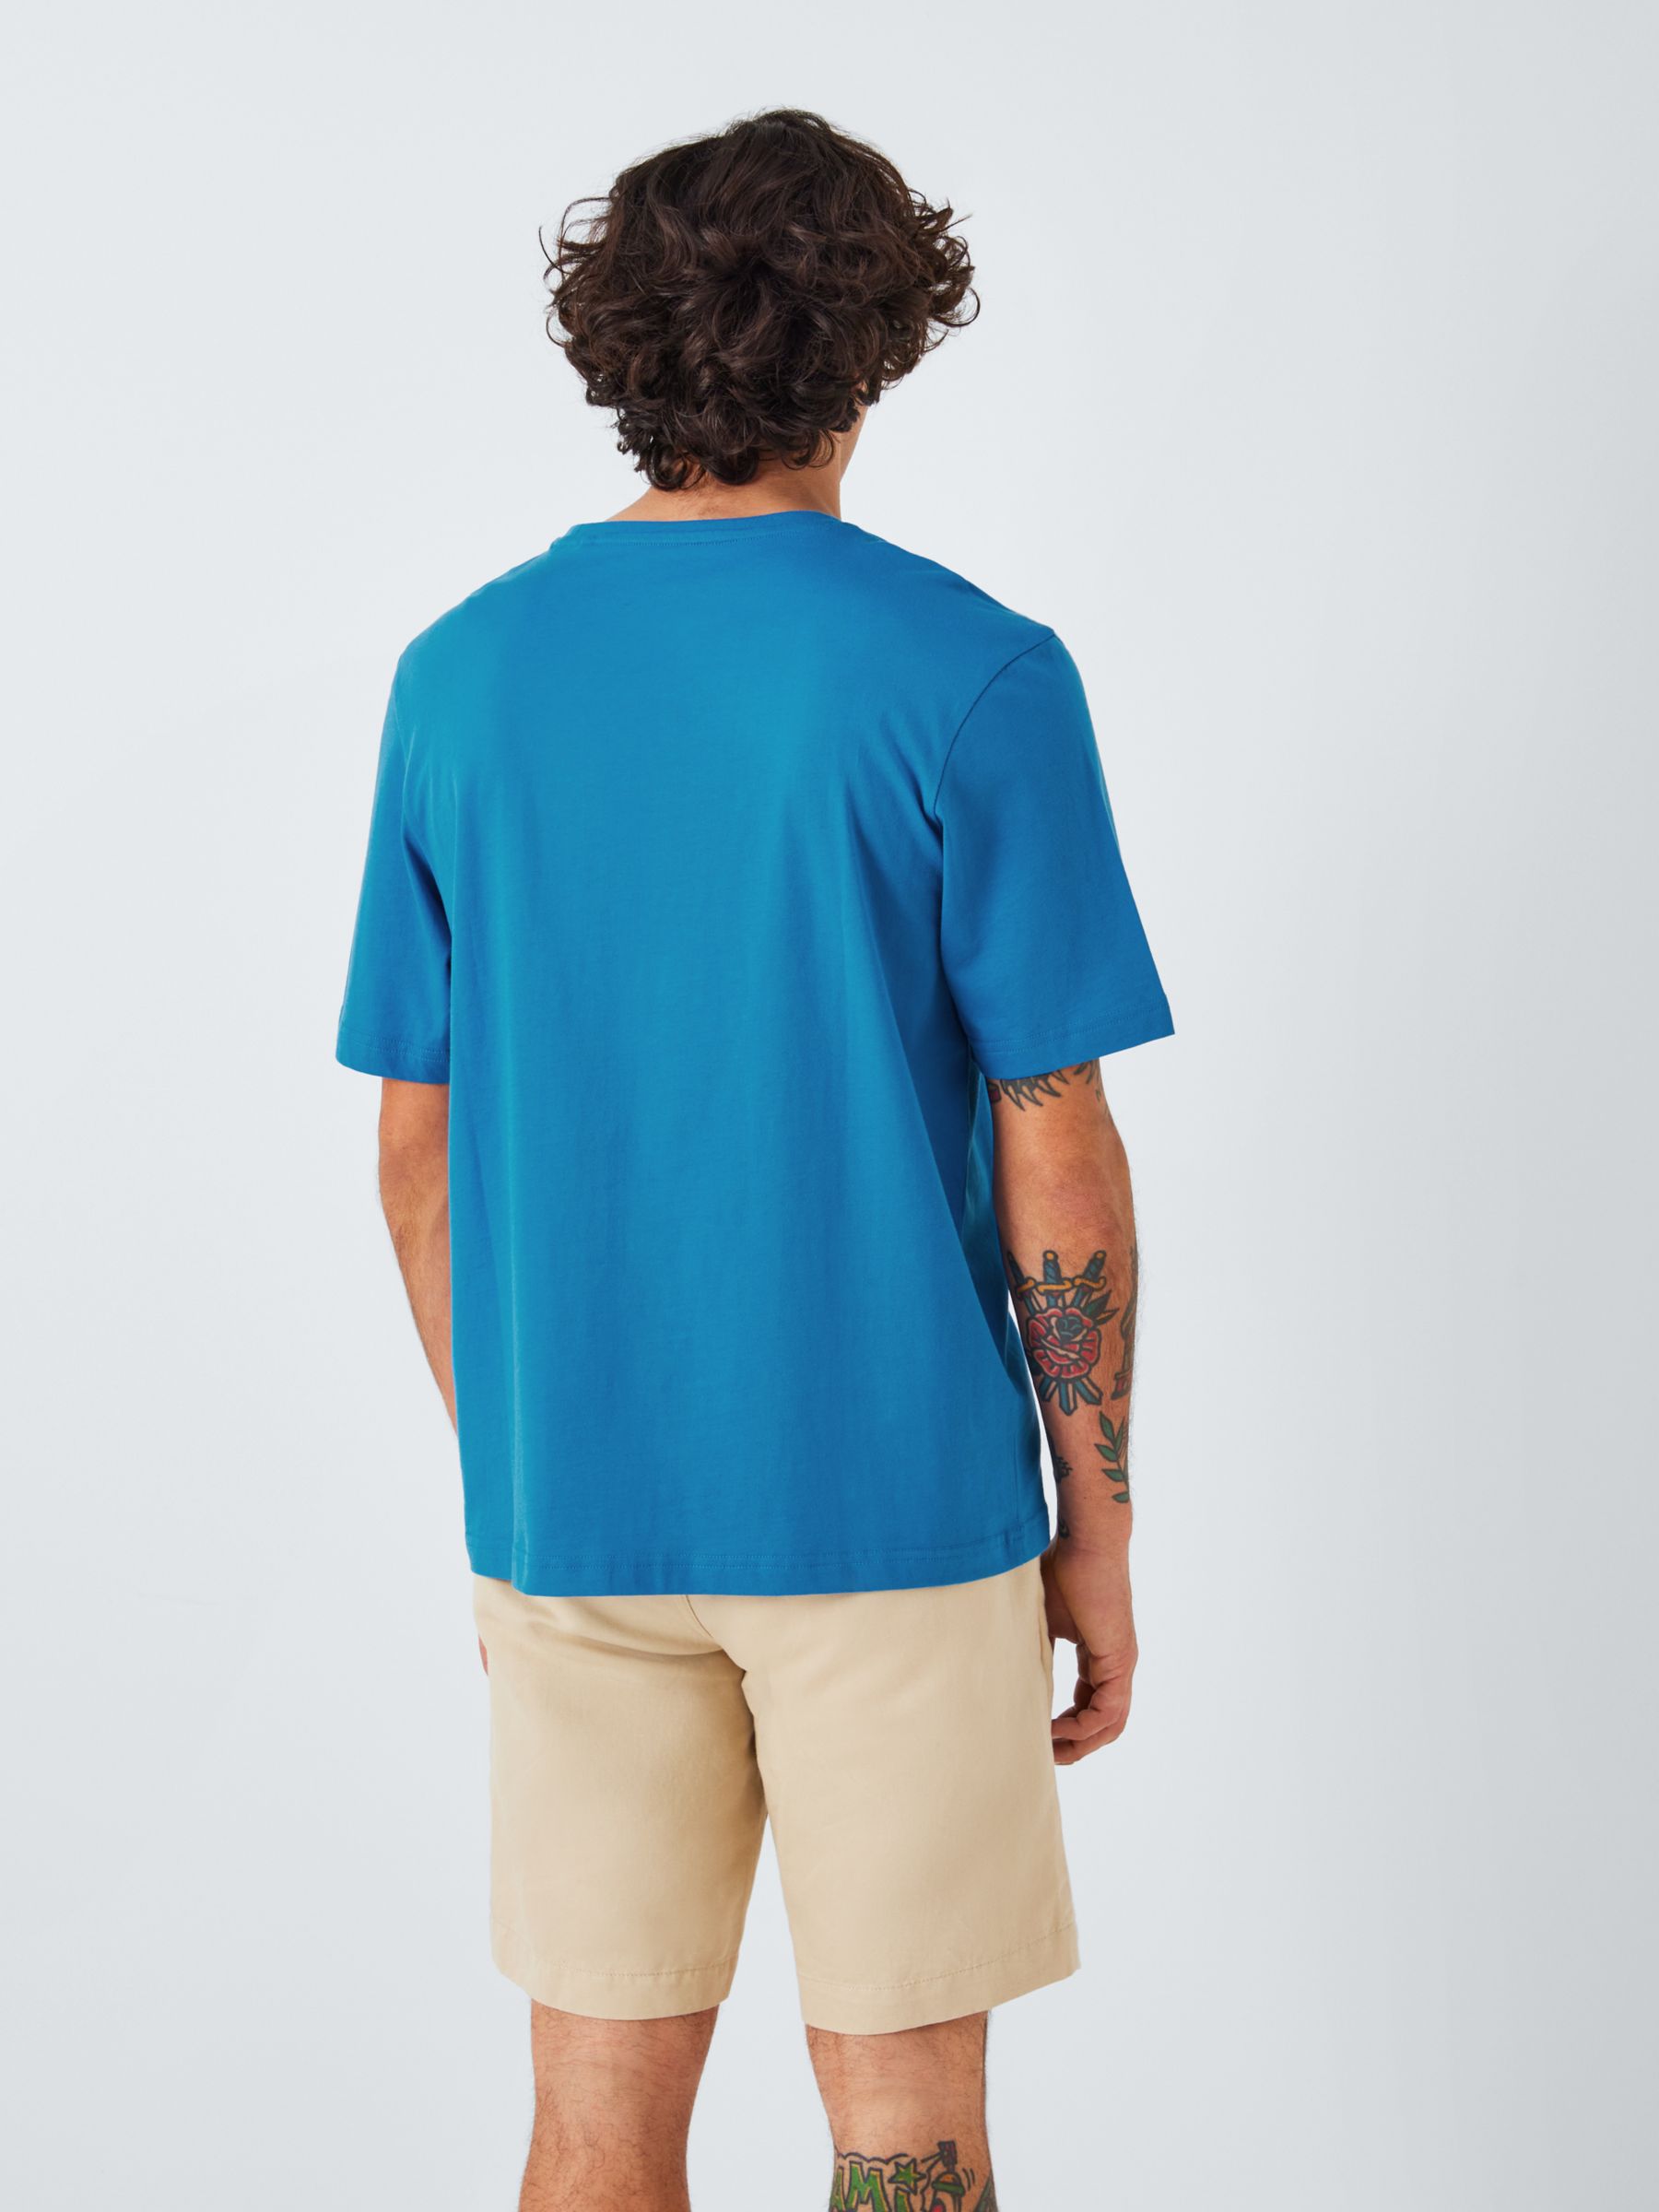 John Lewis Short Sleeve Crew Neck T-Shirt, Blue, XL